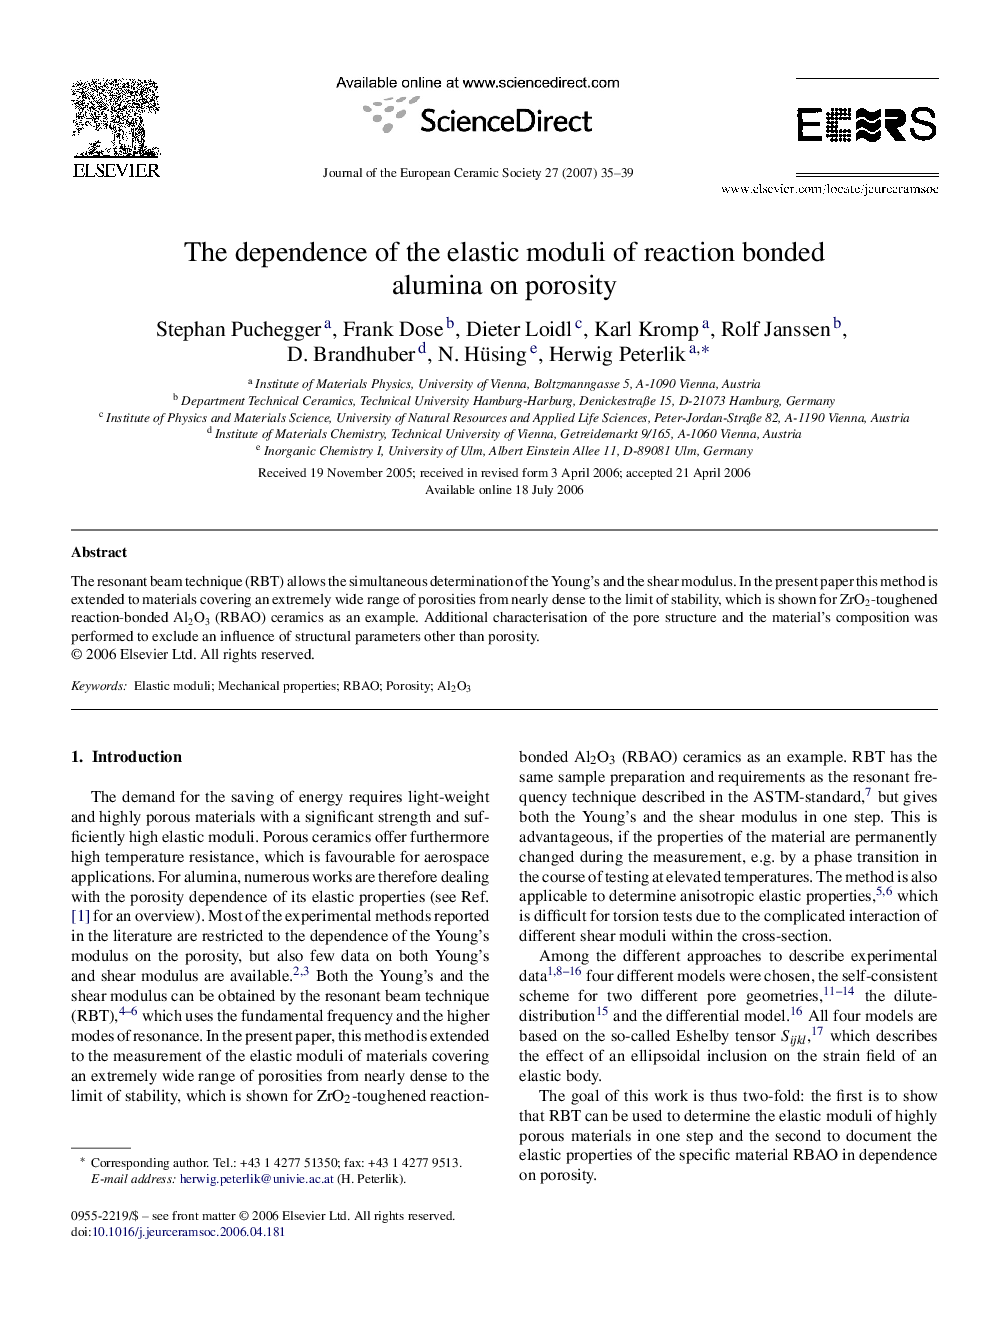 The dependence of the elastic moduli of reaction bonded alumina on porosity